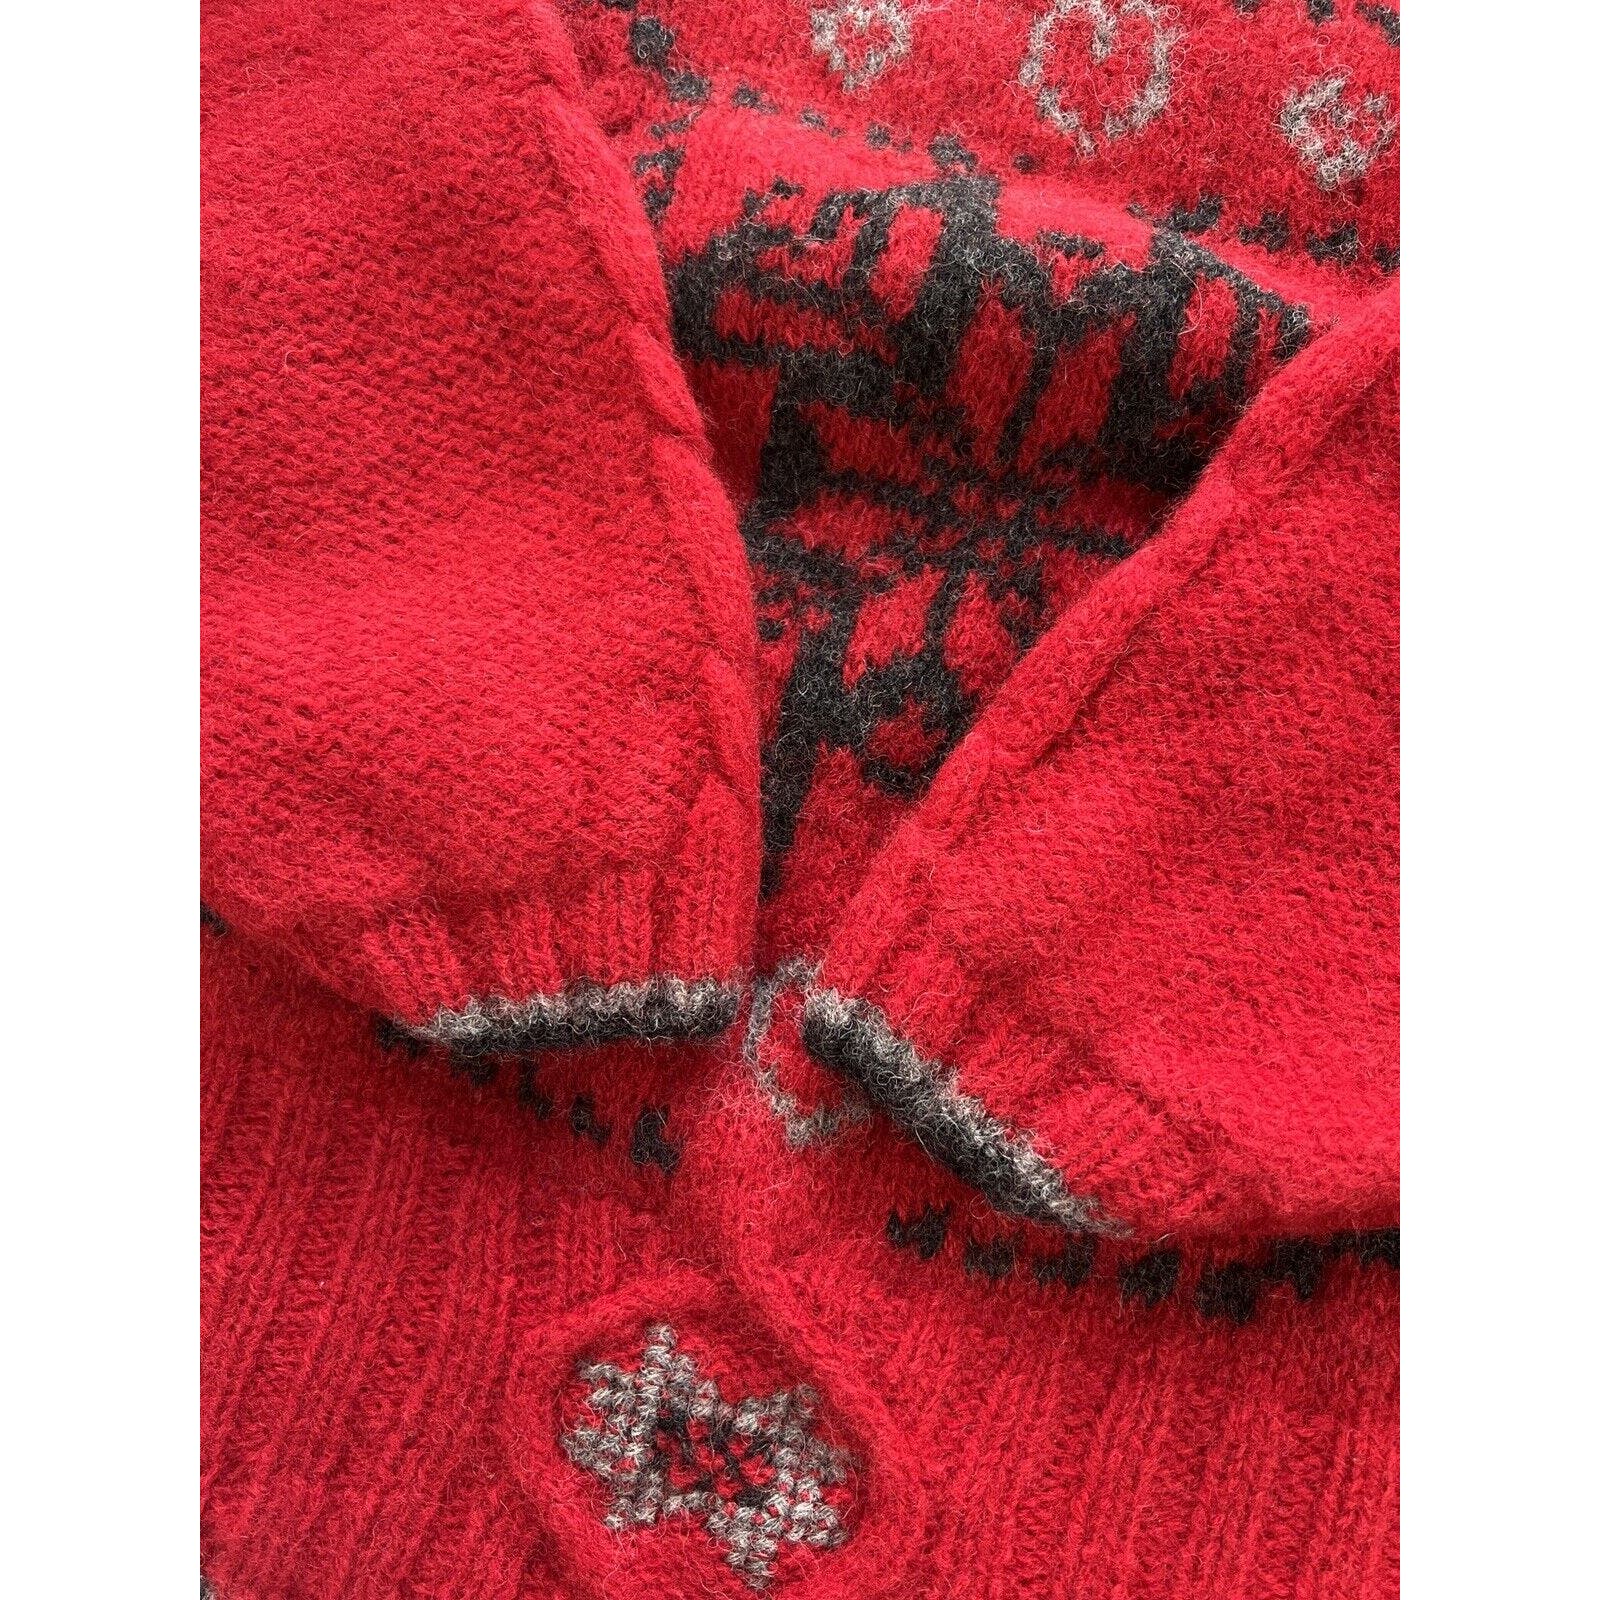 Woolrich Hand Knit Sweater Women’s Medium 100% Wool Nordic Fair Isle Vintage